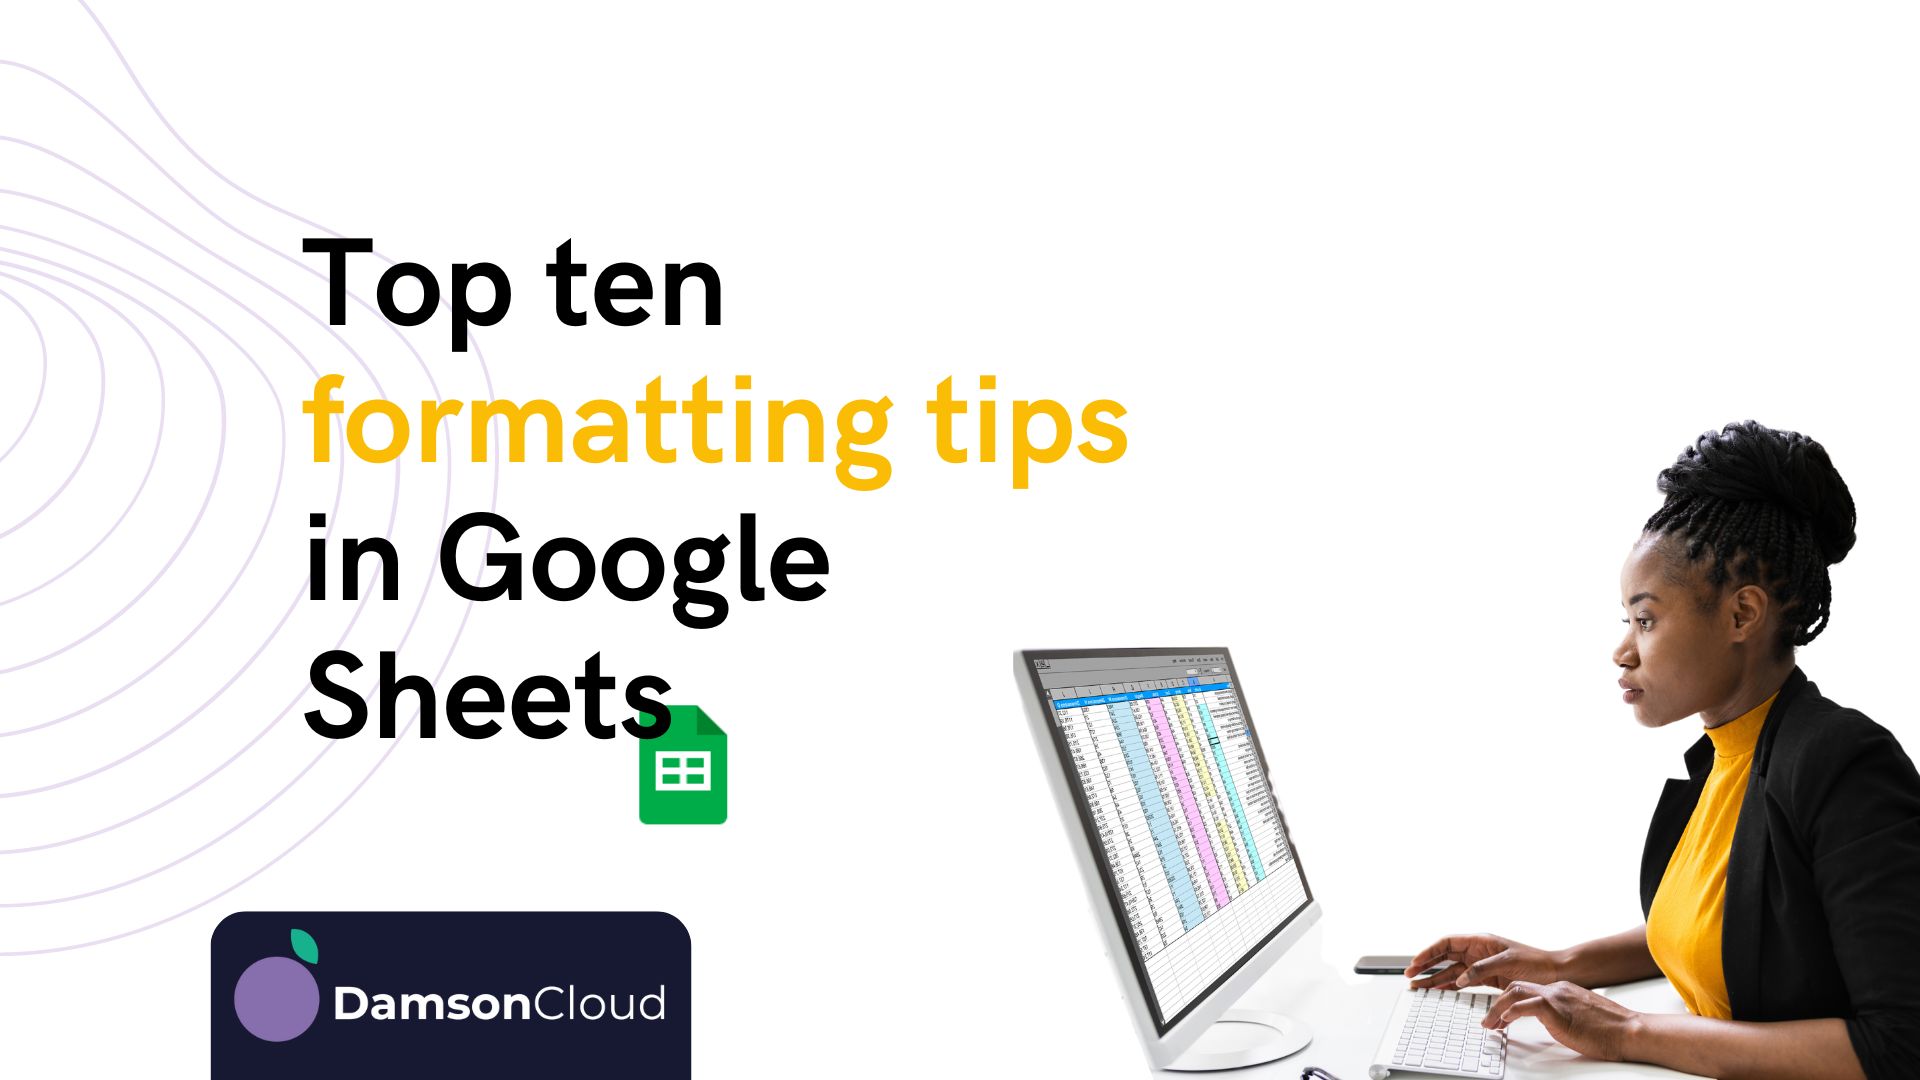 Top ten formatting tips for Google Sheets